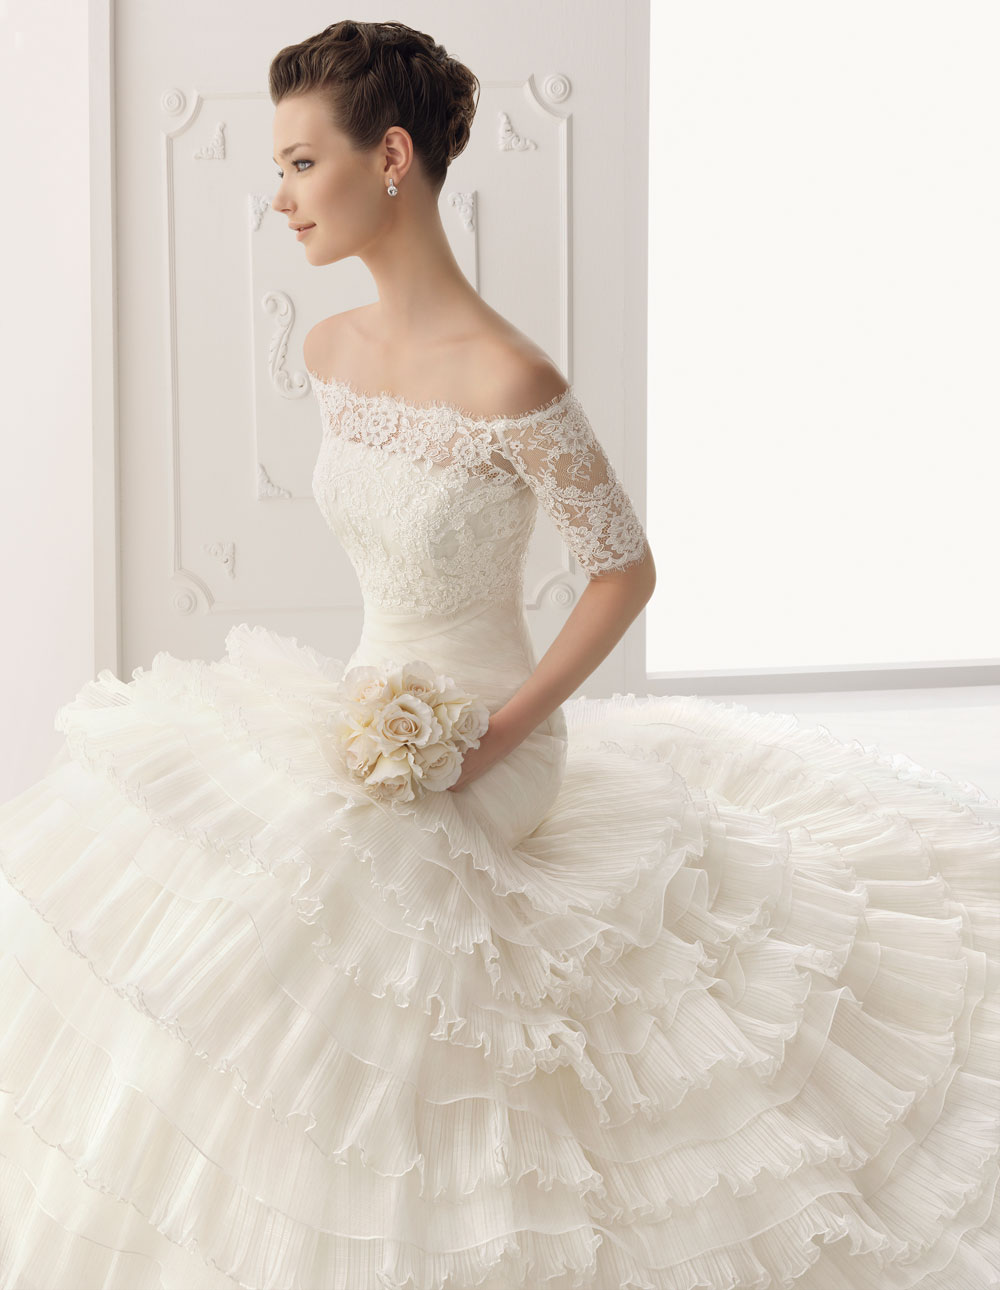 Iloilo Wedding Blog: {Wedding Gown Inspiration} Alma Novia Wedding ...